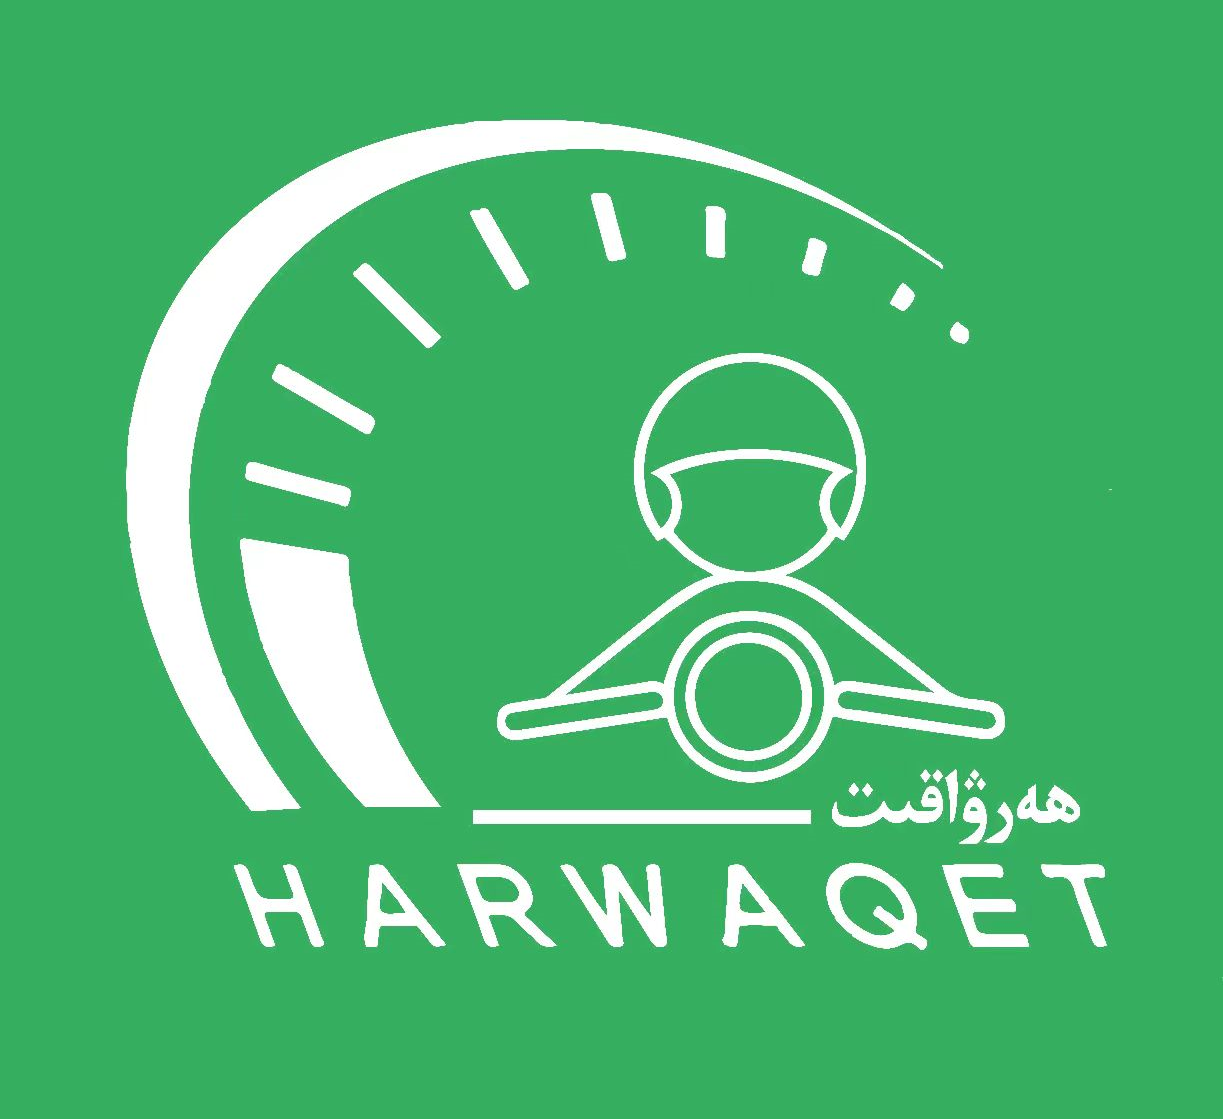 Harwaqit